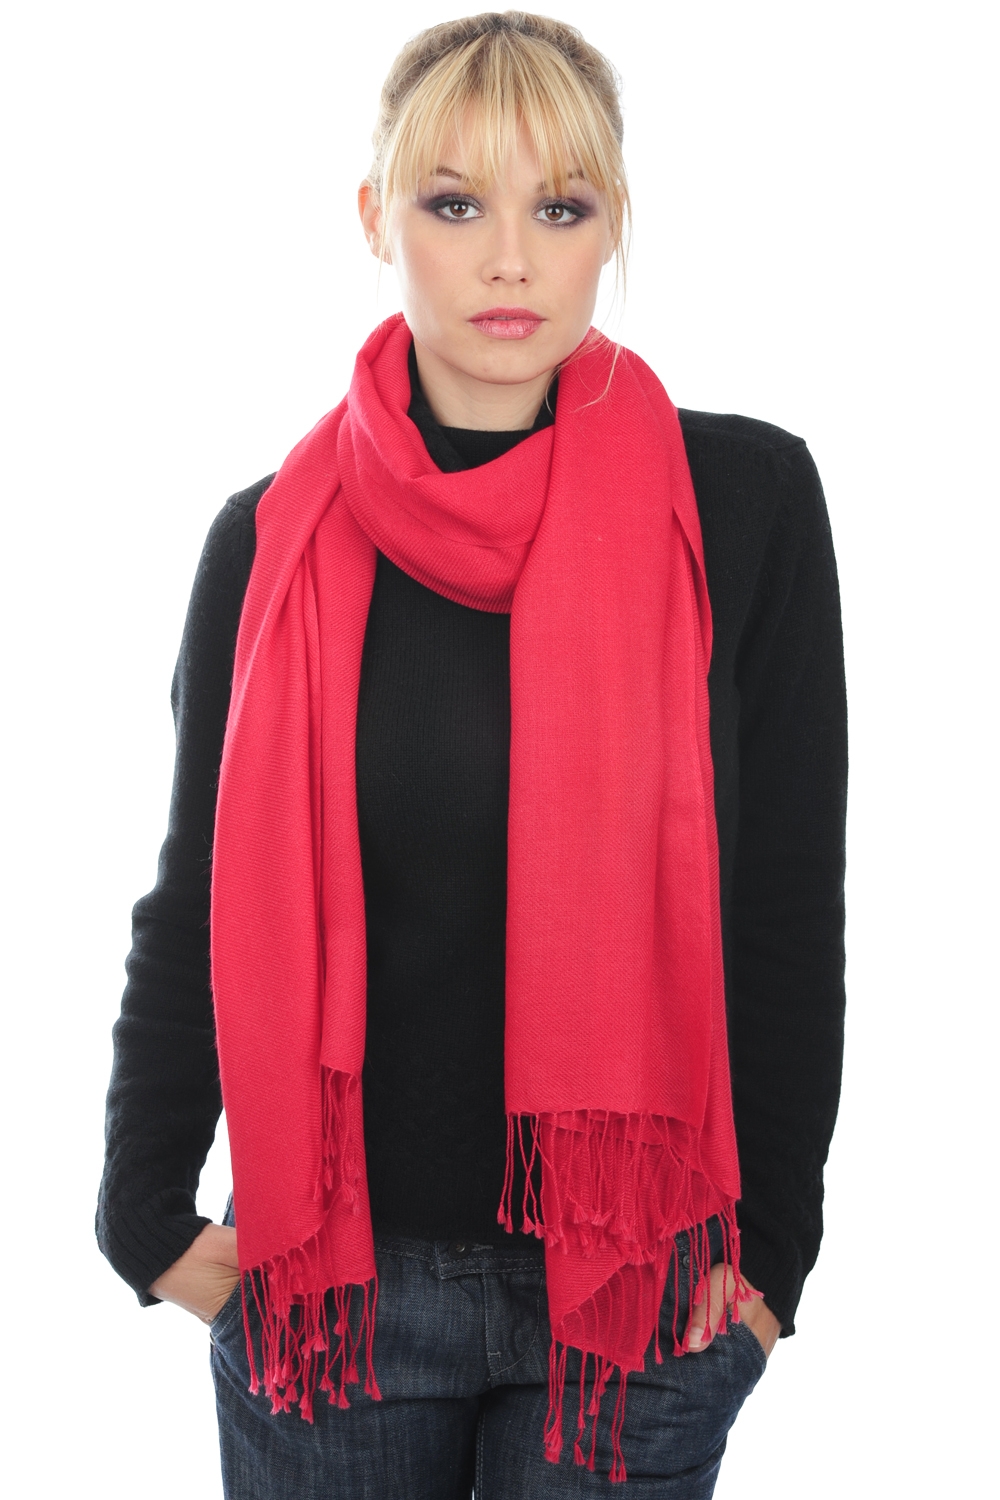 Cashmere accessories shawls diamant flashing red coral 201 cm x 71 cm